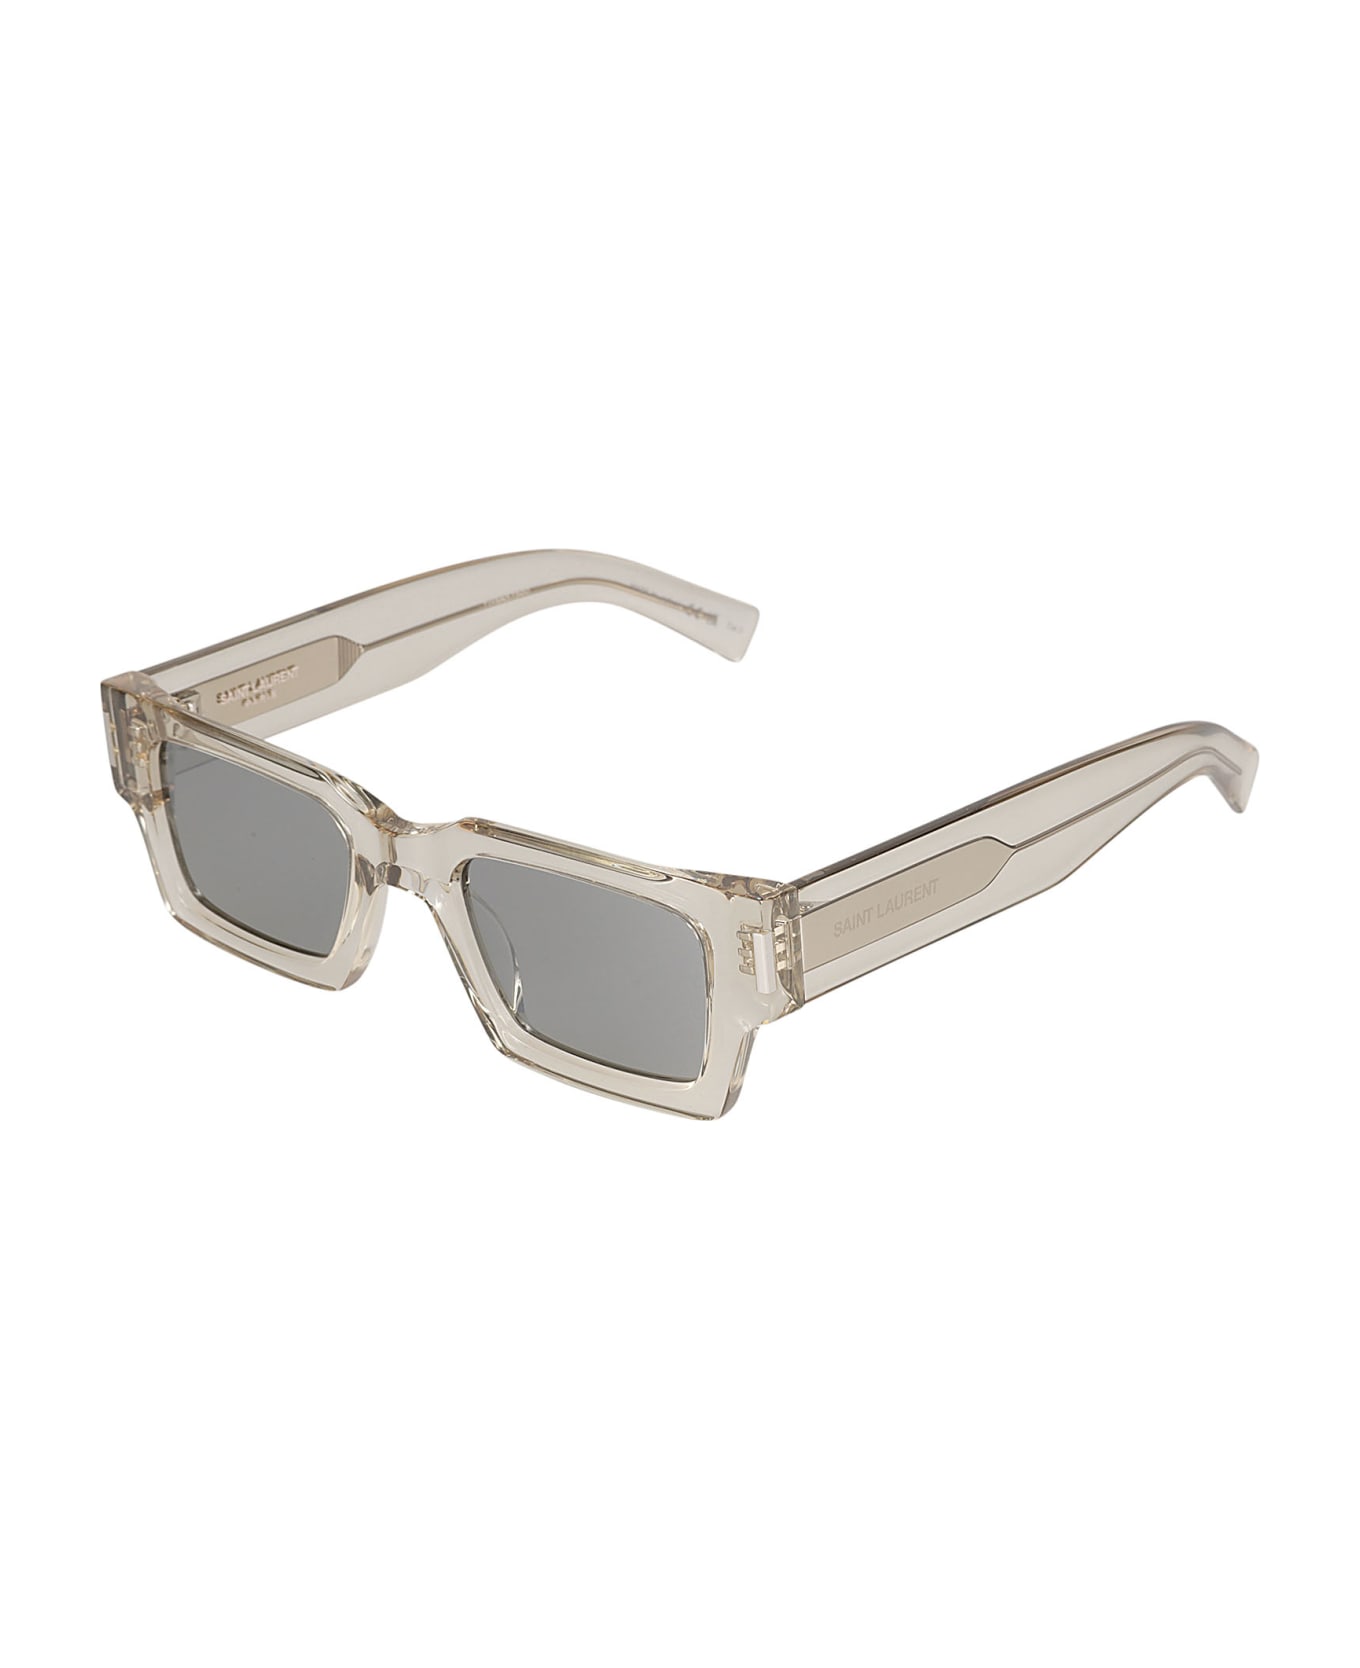 Saint Laurent Eyewear Square Frame Transparent Sunglasses - Beige/Silver